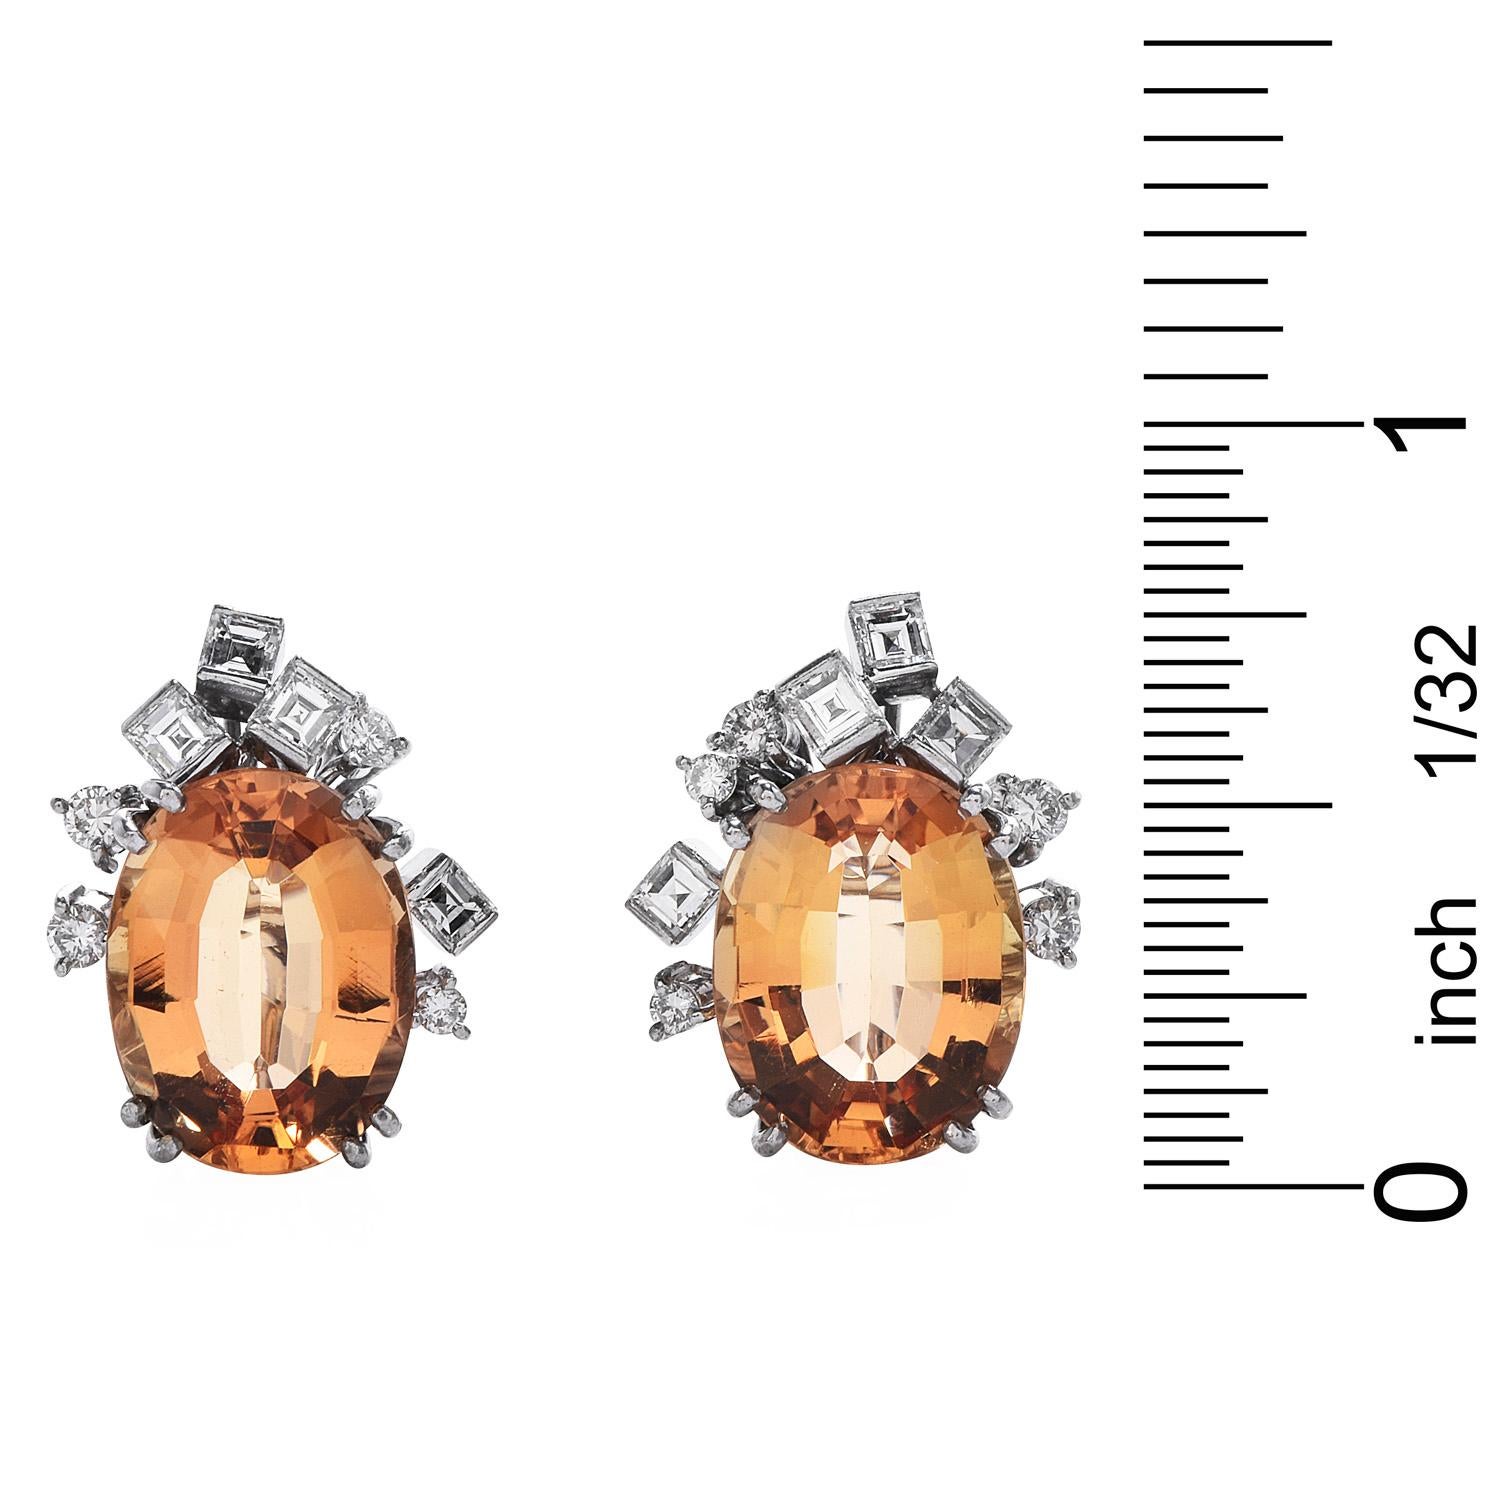 Oval Cut GIA 10.60cts Imperial Topaz Diamond 18K Gold Earrings